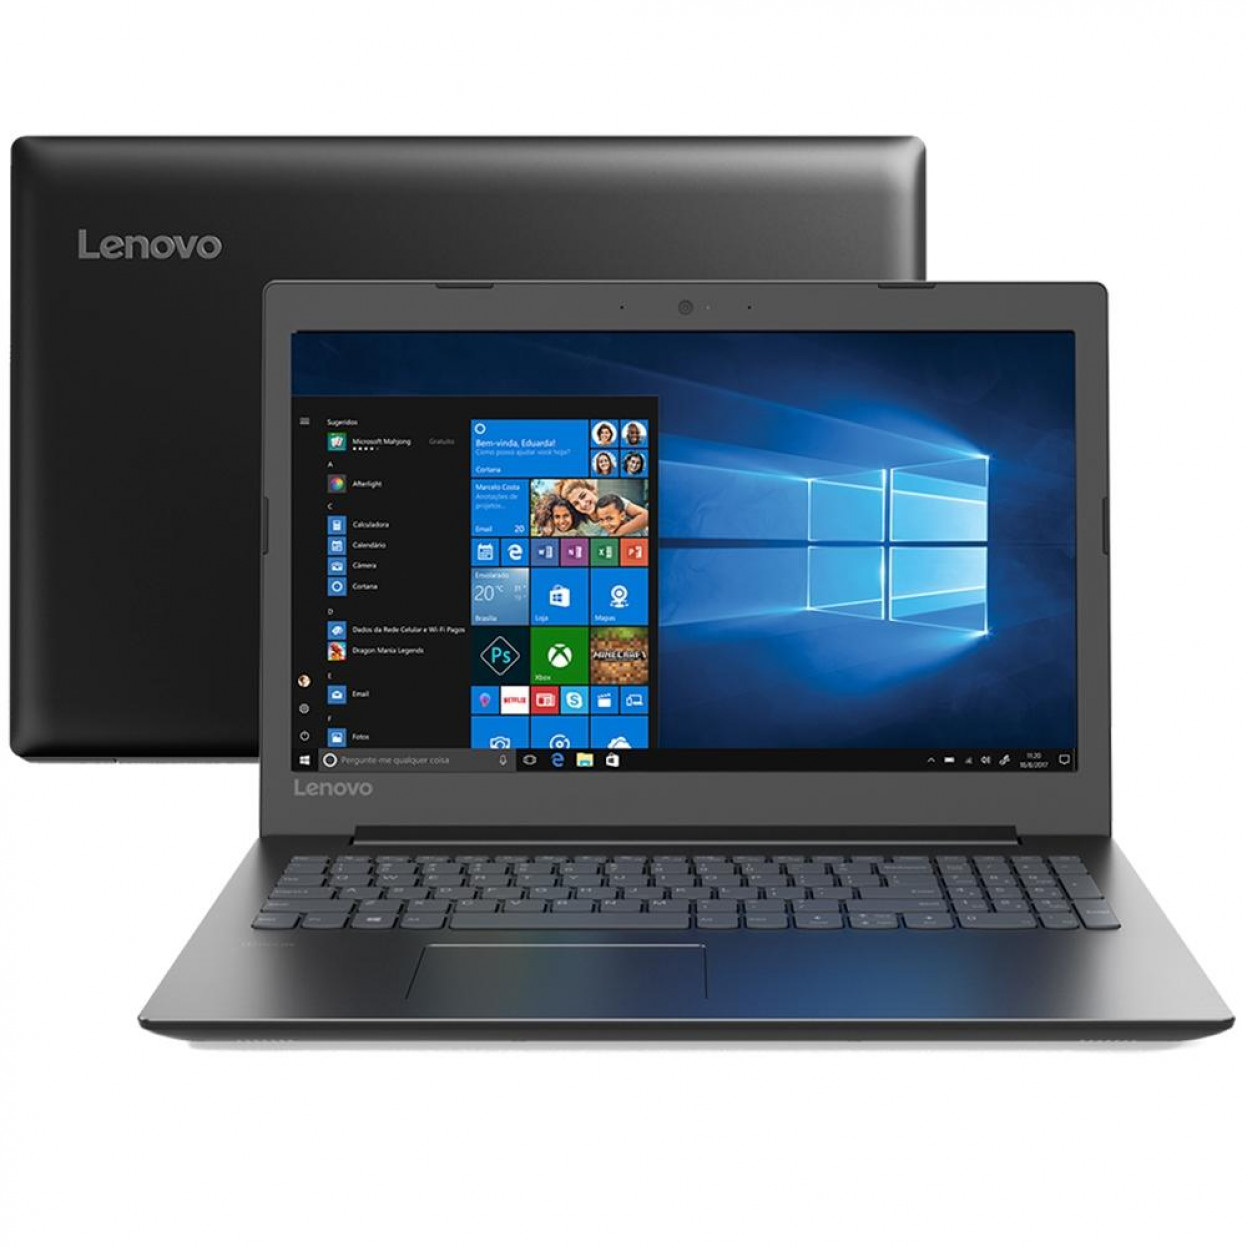 Notebook Lenovo B330 Core I3 7020u Memoria 4gb Ssd 128gb Tela 15.6' Hd Windows 10 Home